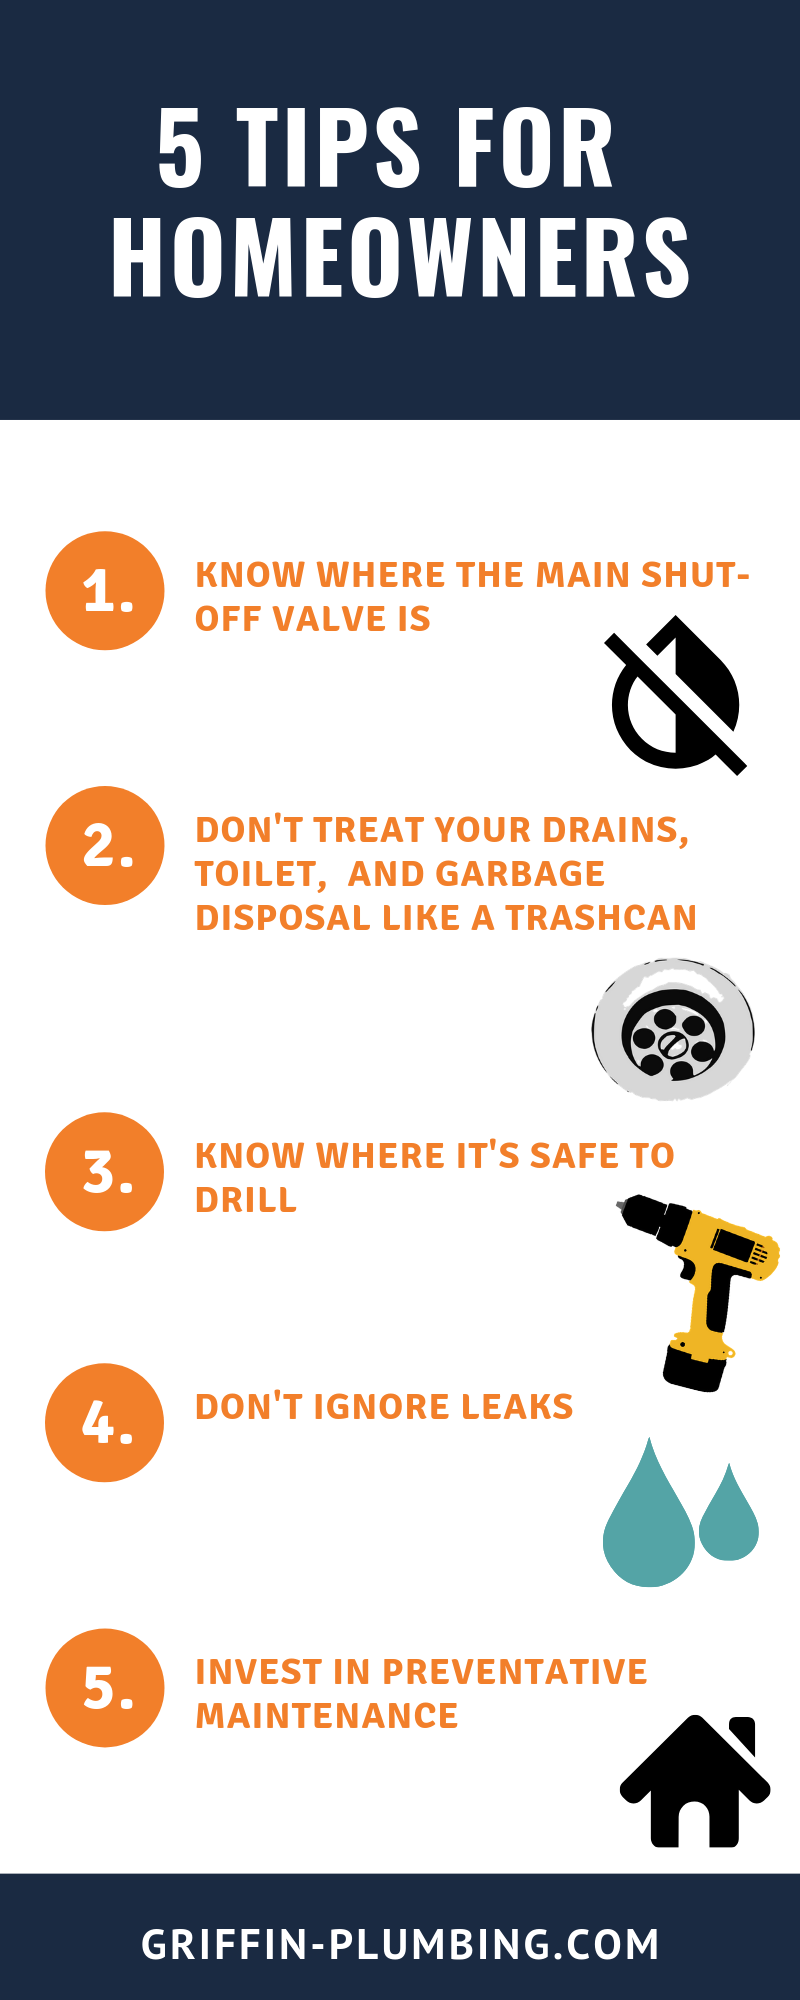 Plumbing Tips - Prevent Your Plumbing From Freezing